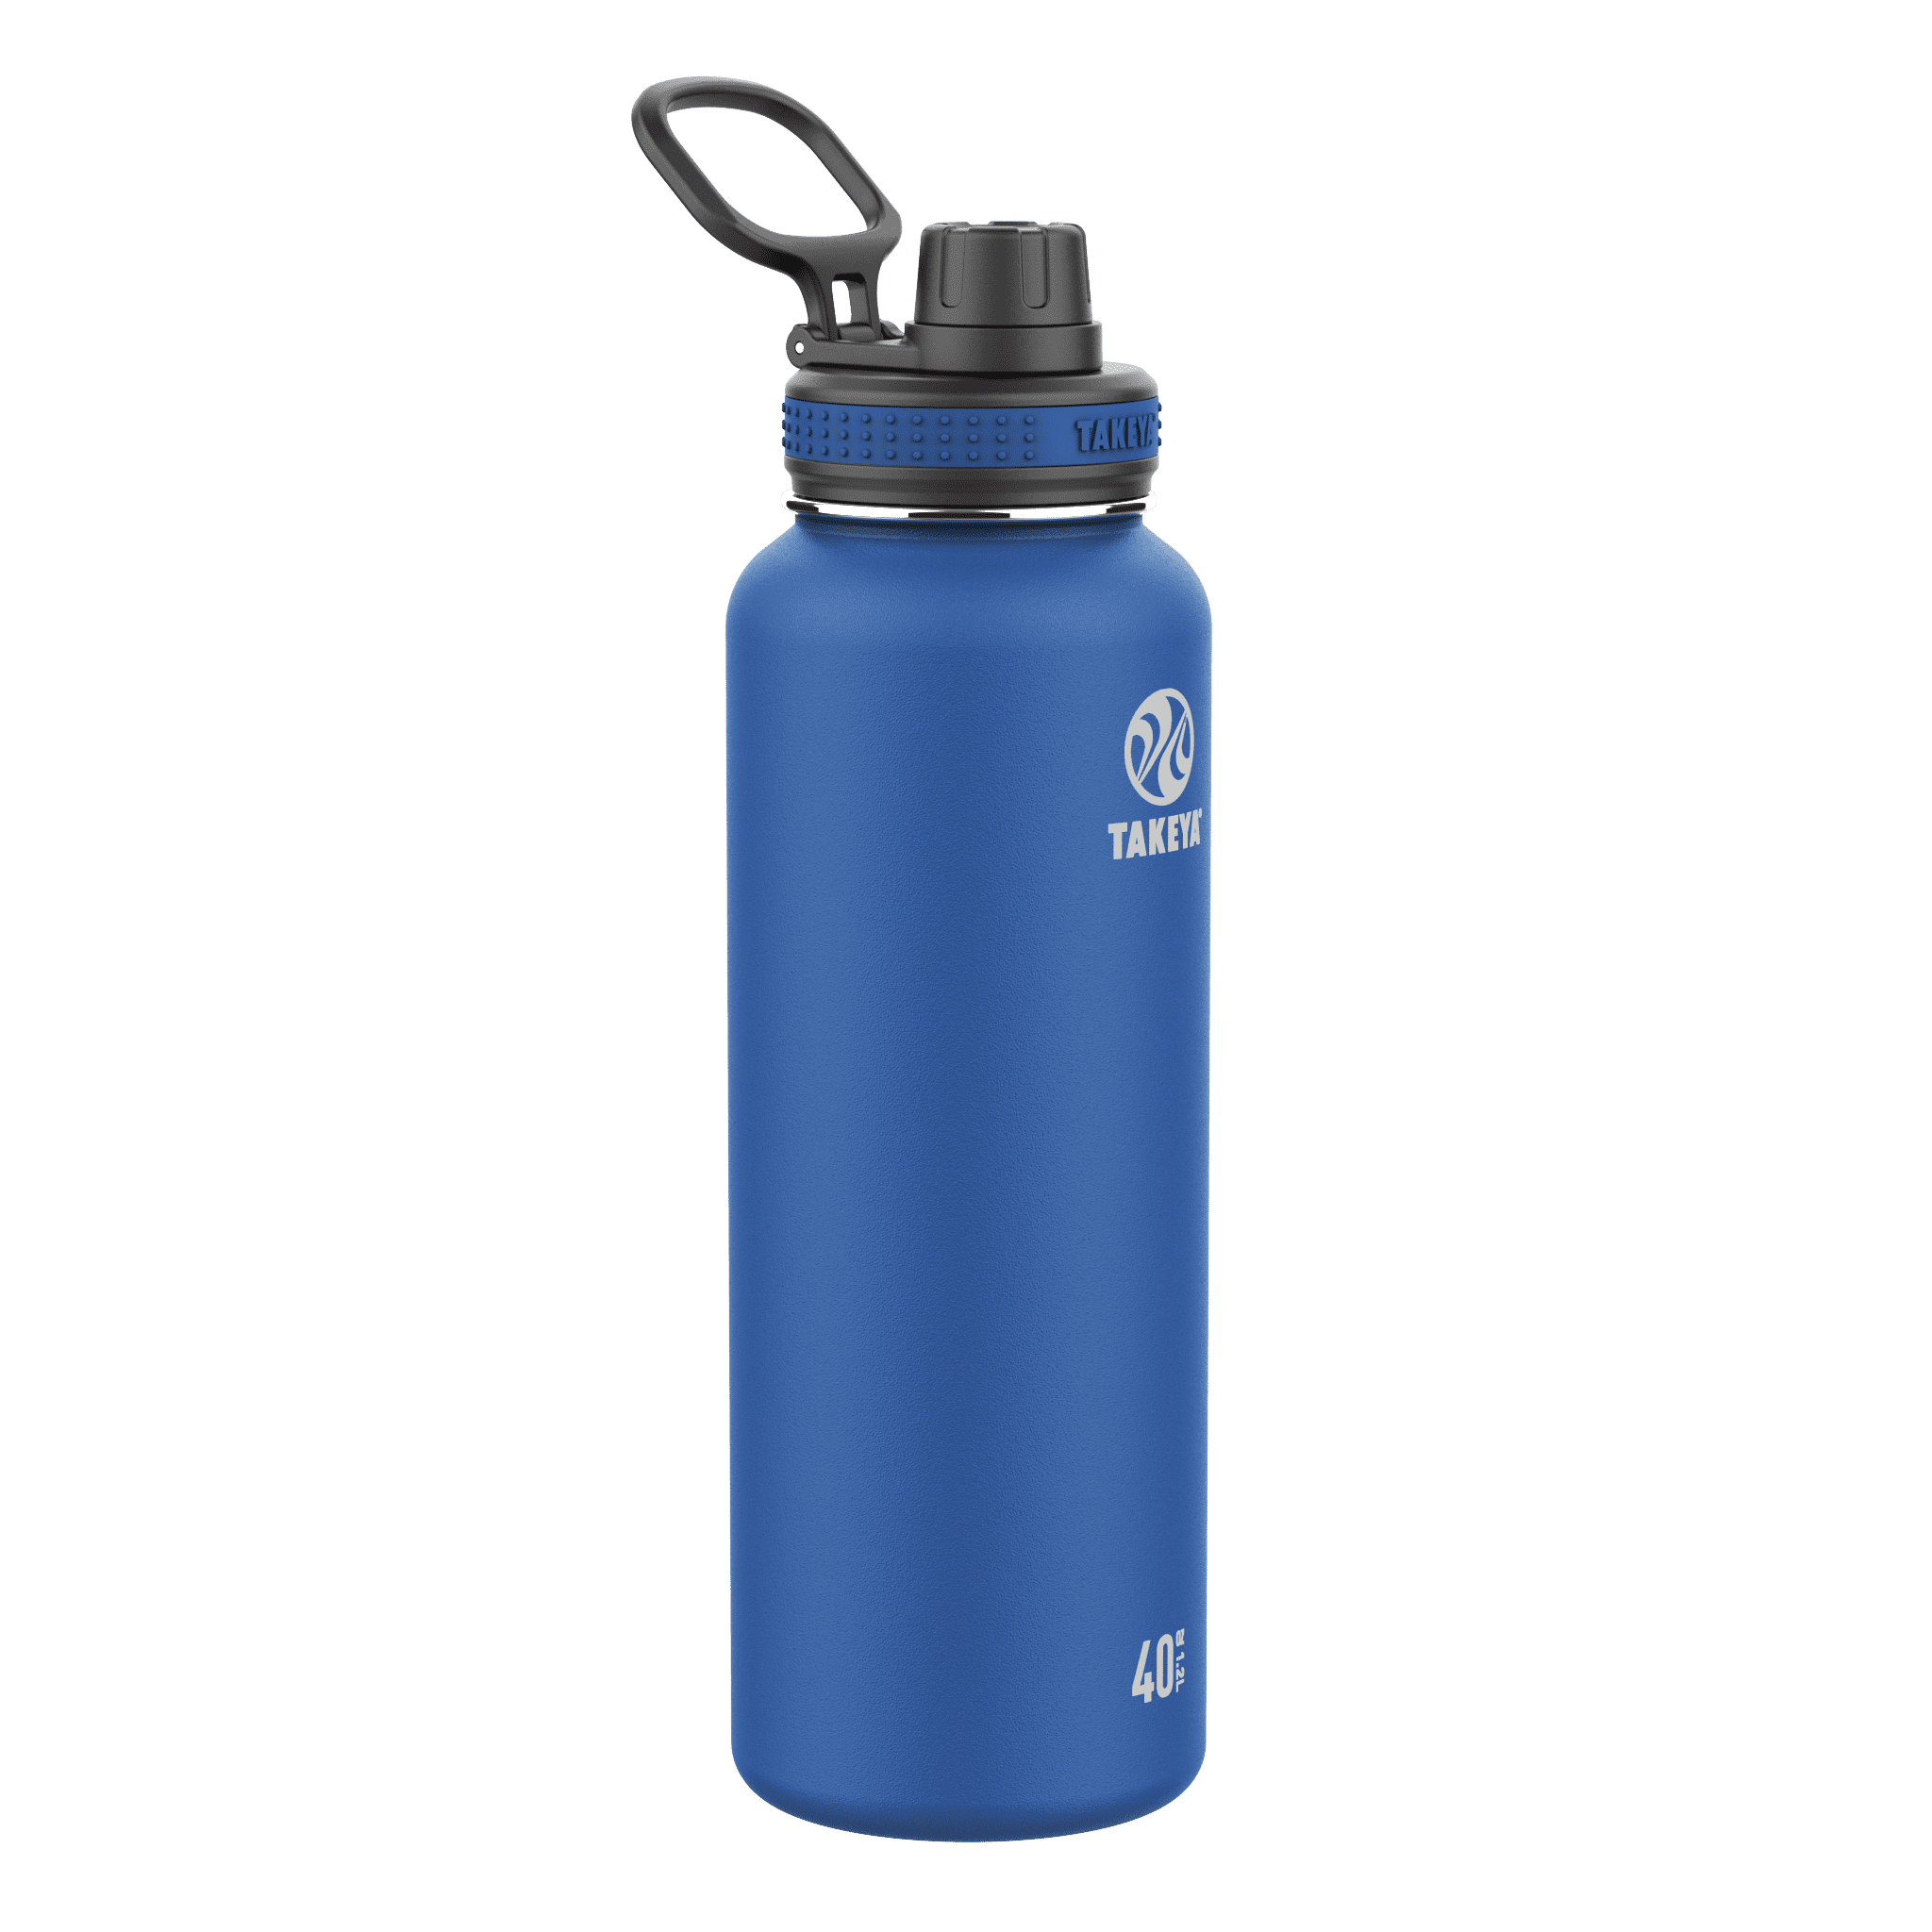 Takeya Originals Spout Water Bottle, Stainless Steel, Vacuum